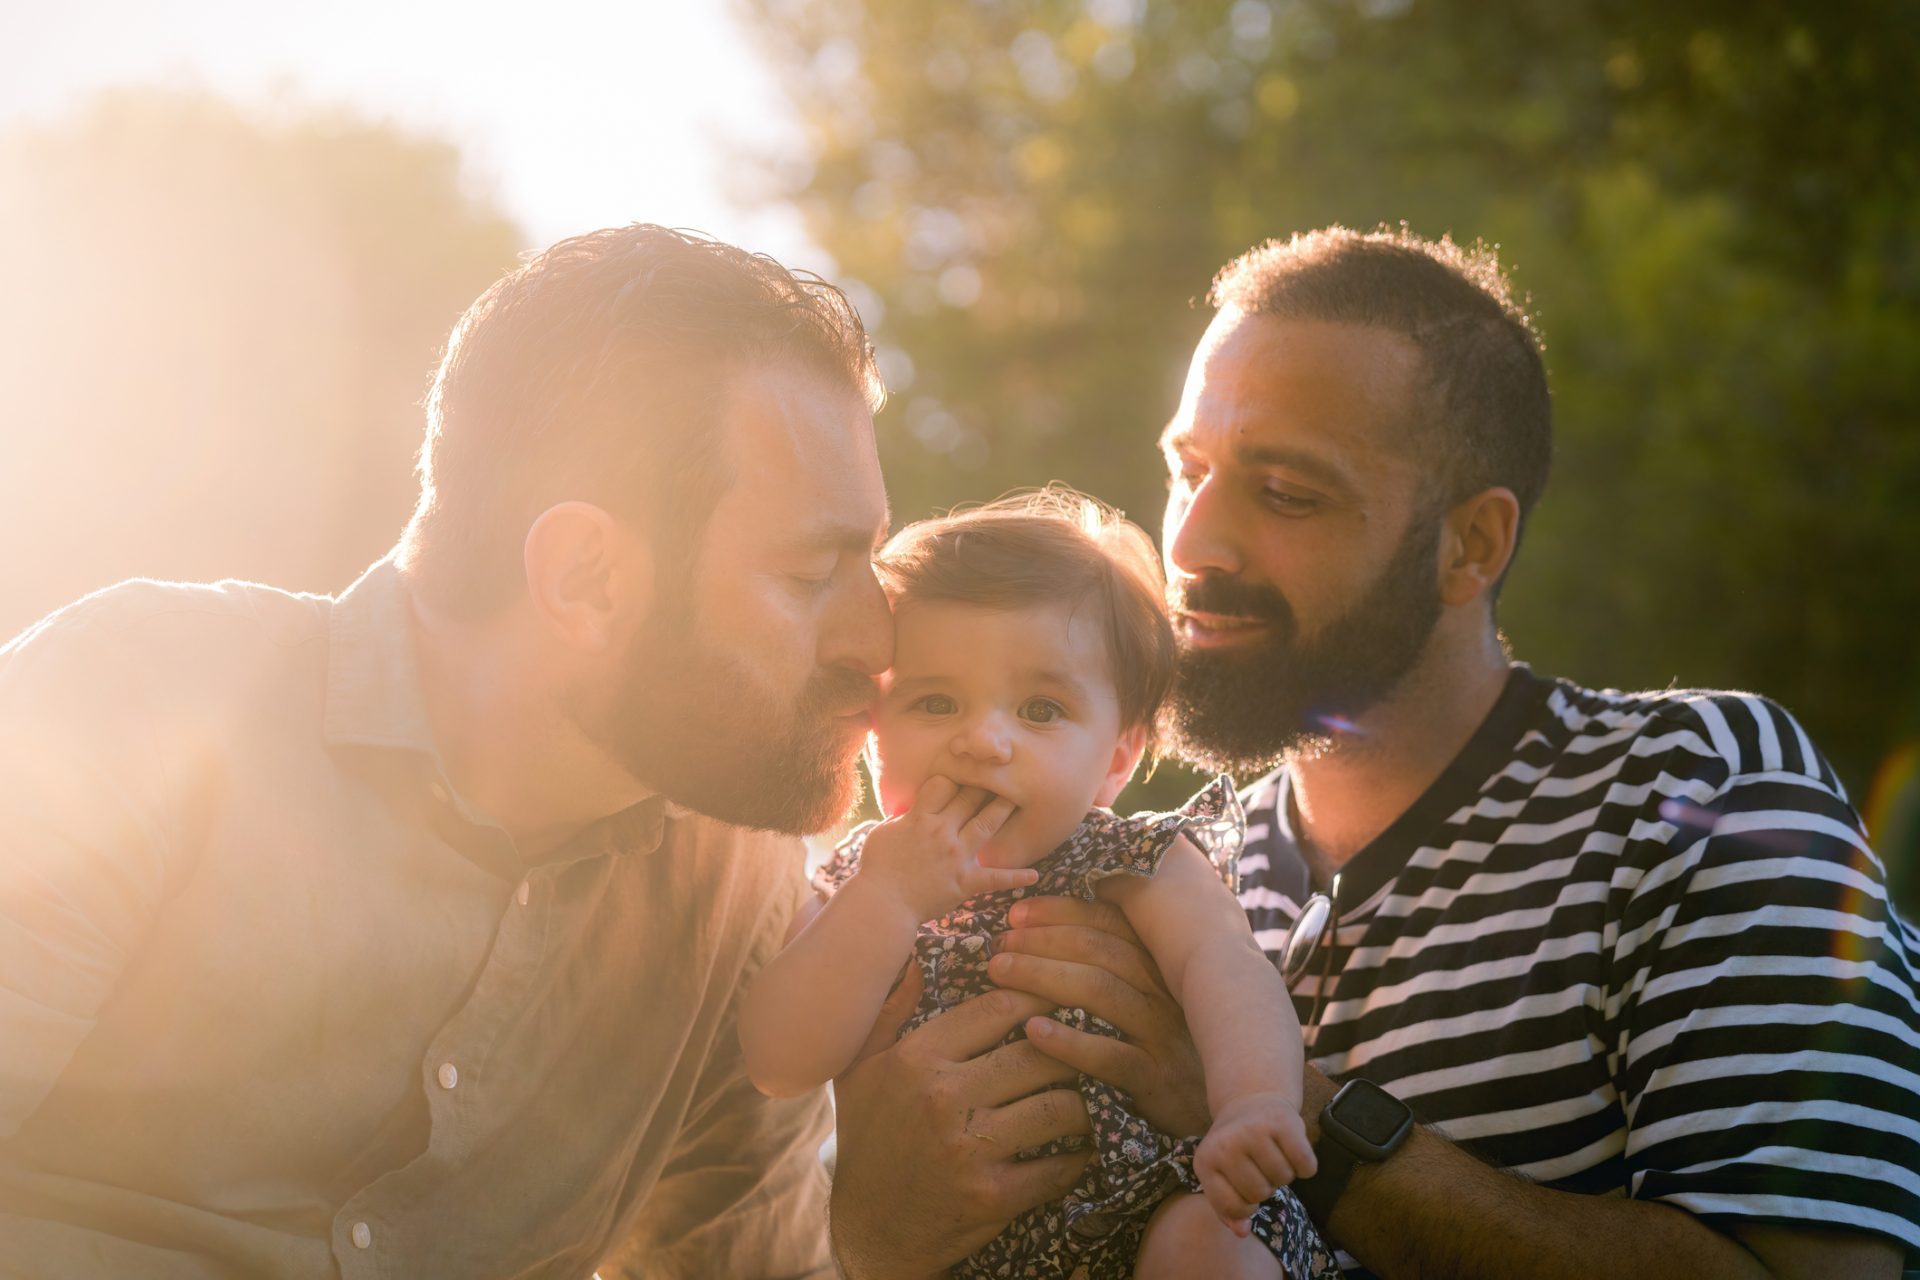 Science might help same-sex couples have biological children together